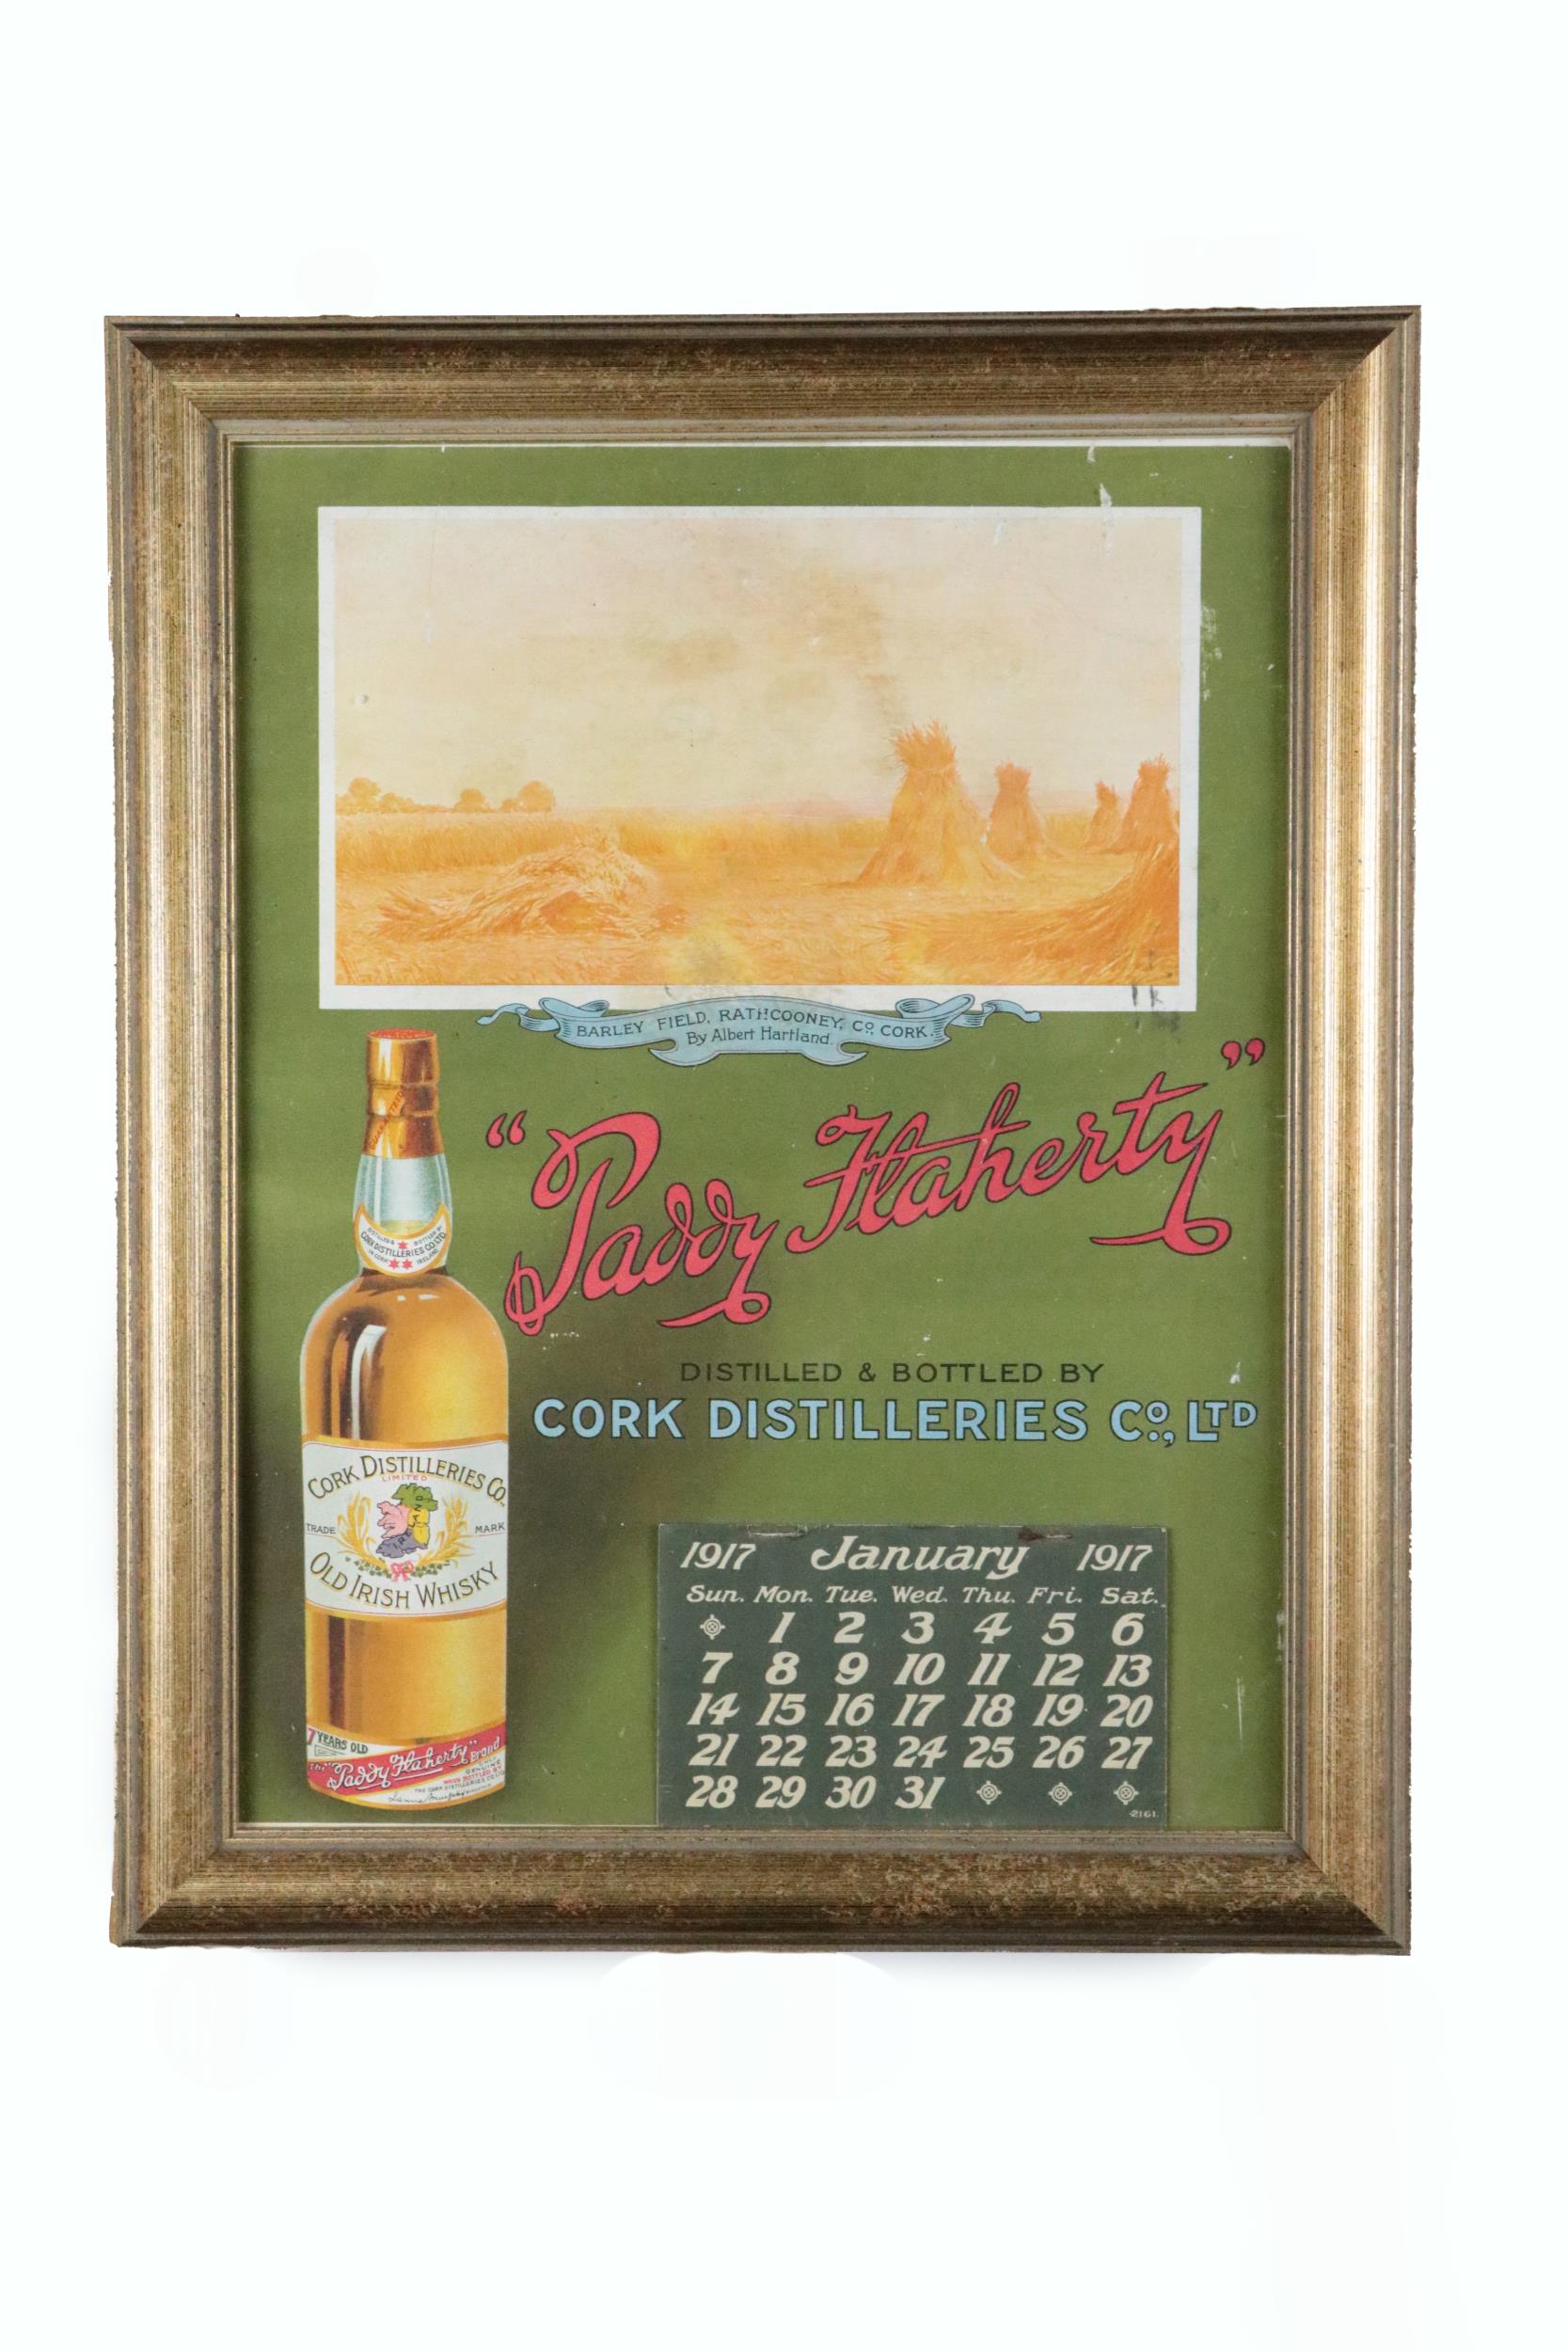 A rare original Irish Lithographic Advertisement Calendar, for "Paddy Flaherty - Cork Distillers